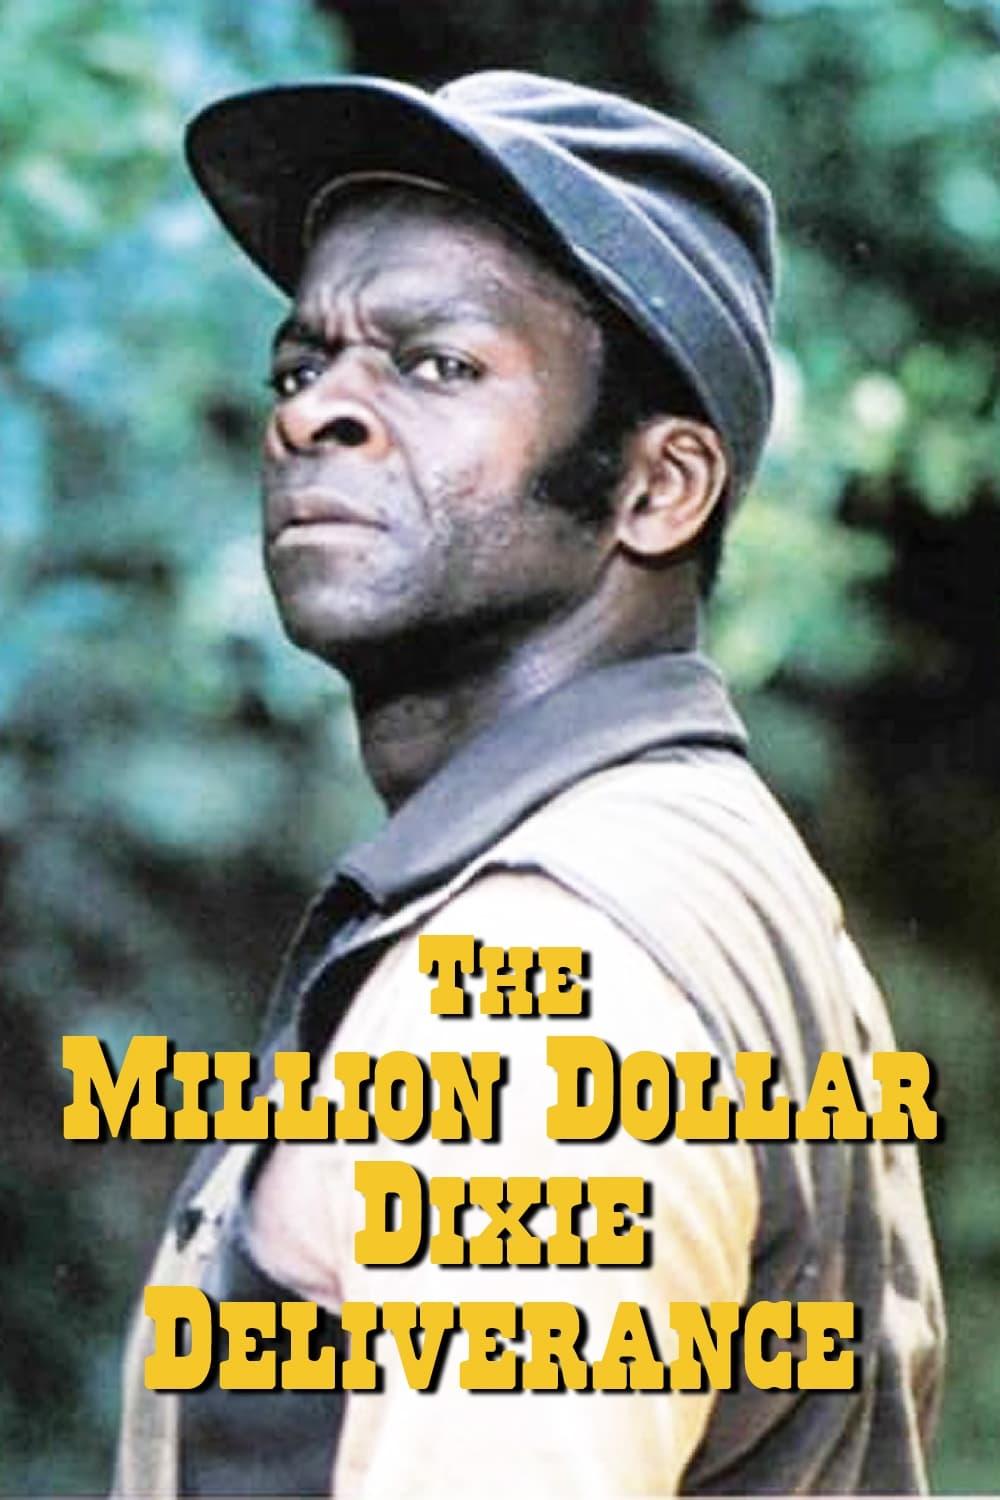 The Million Dollar Dixie Deliverance poster